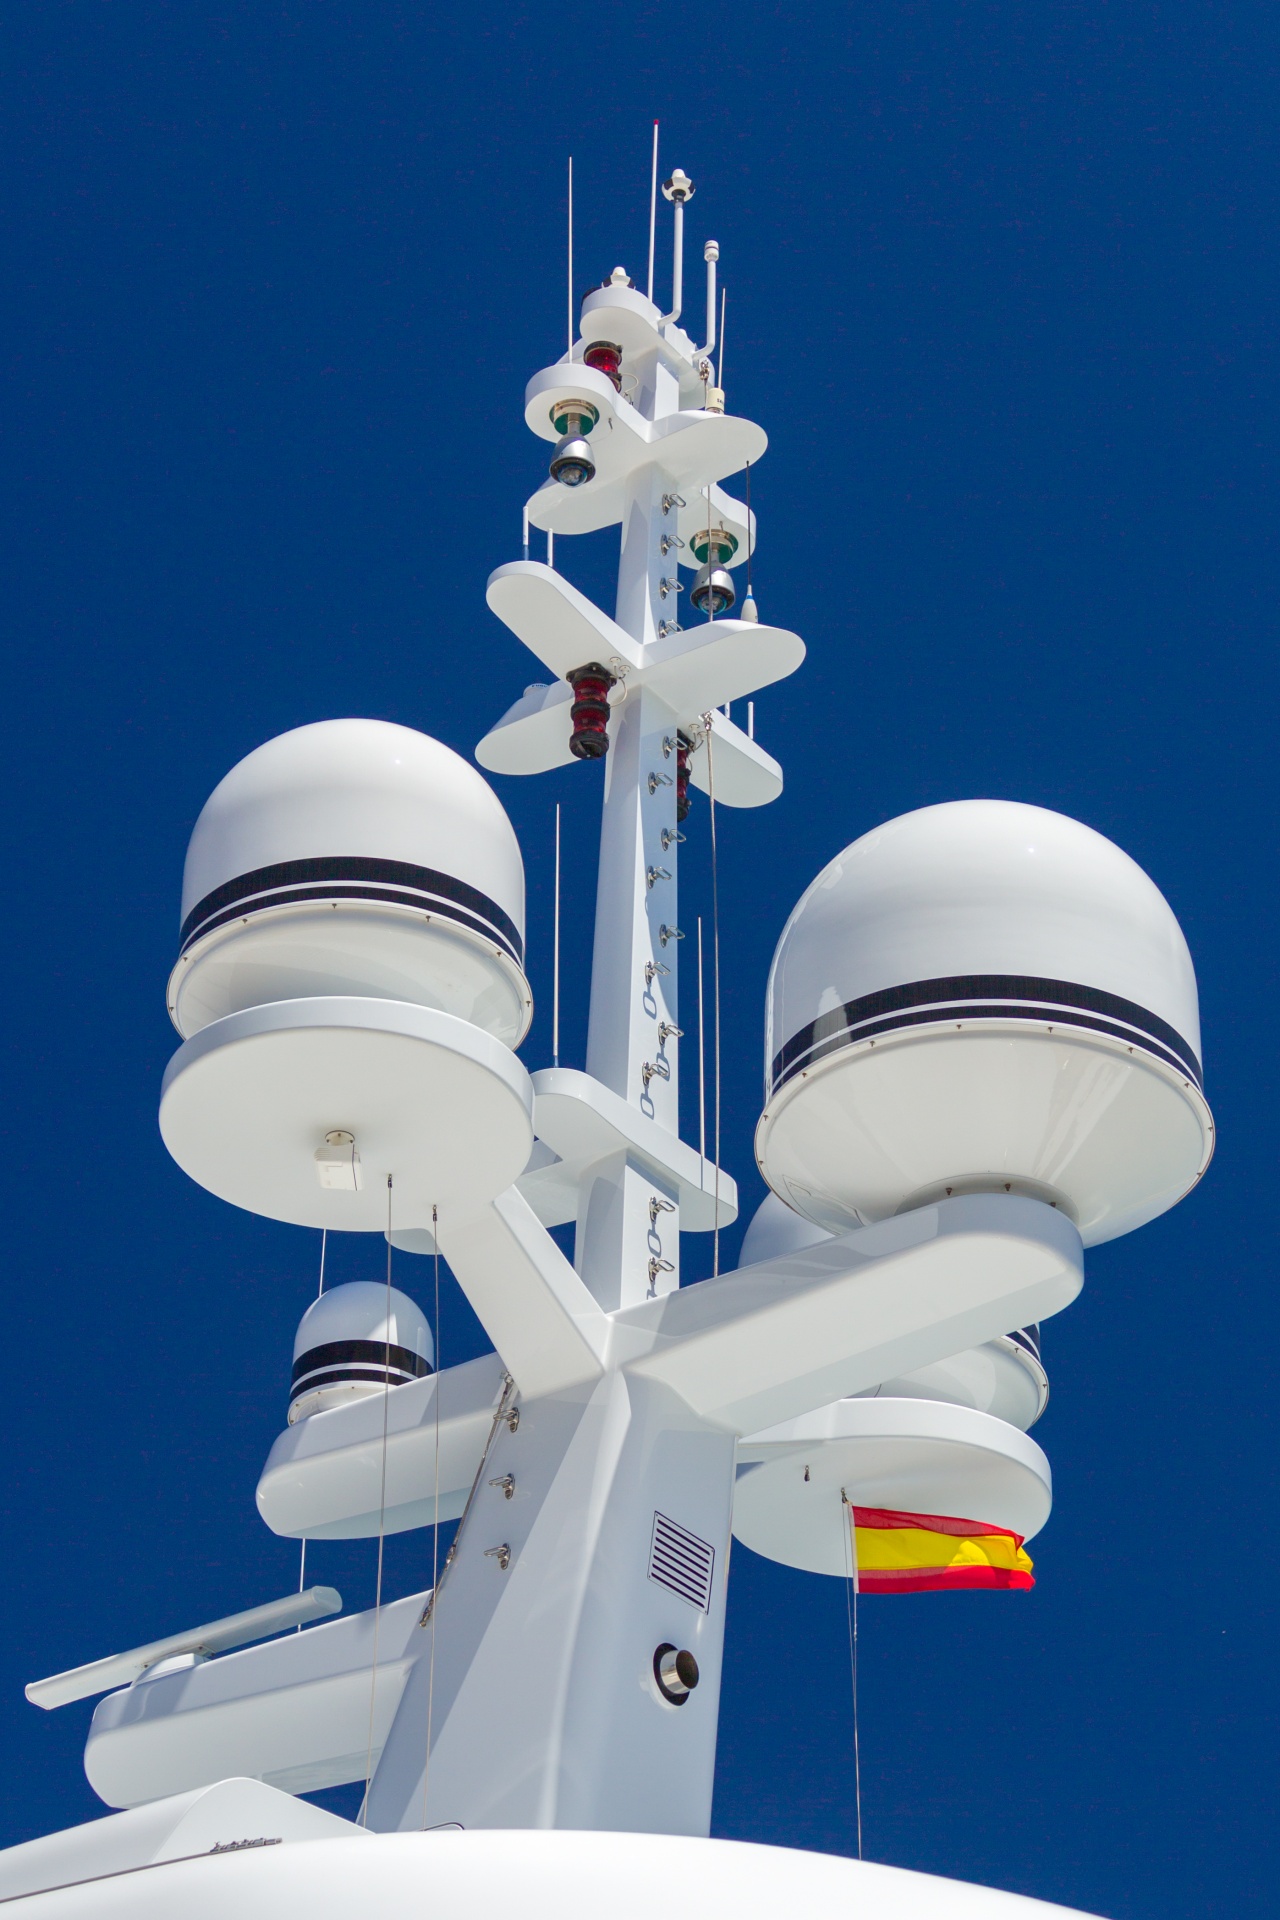 Yacht radar navigation system against blue sky